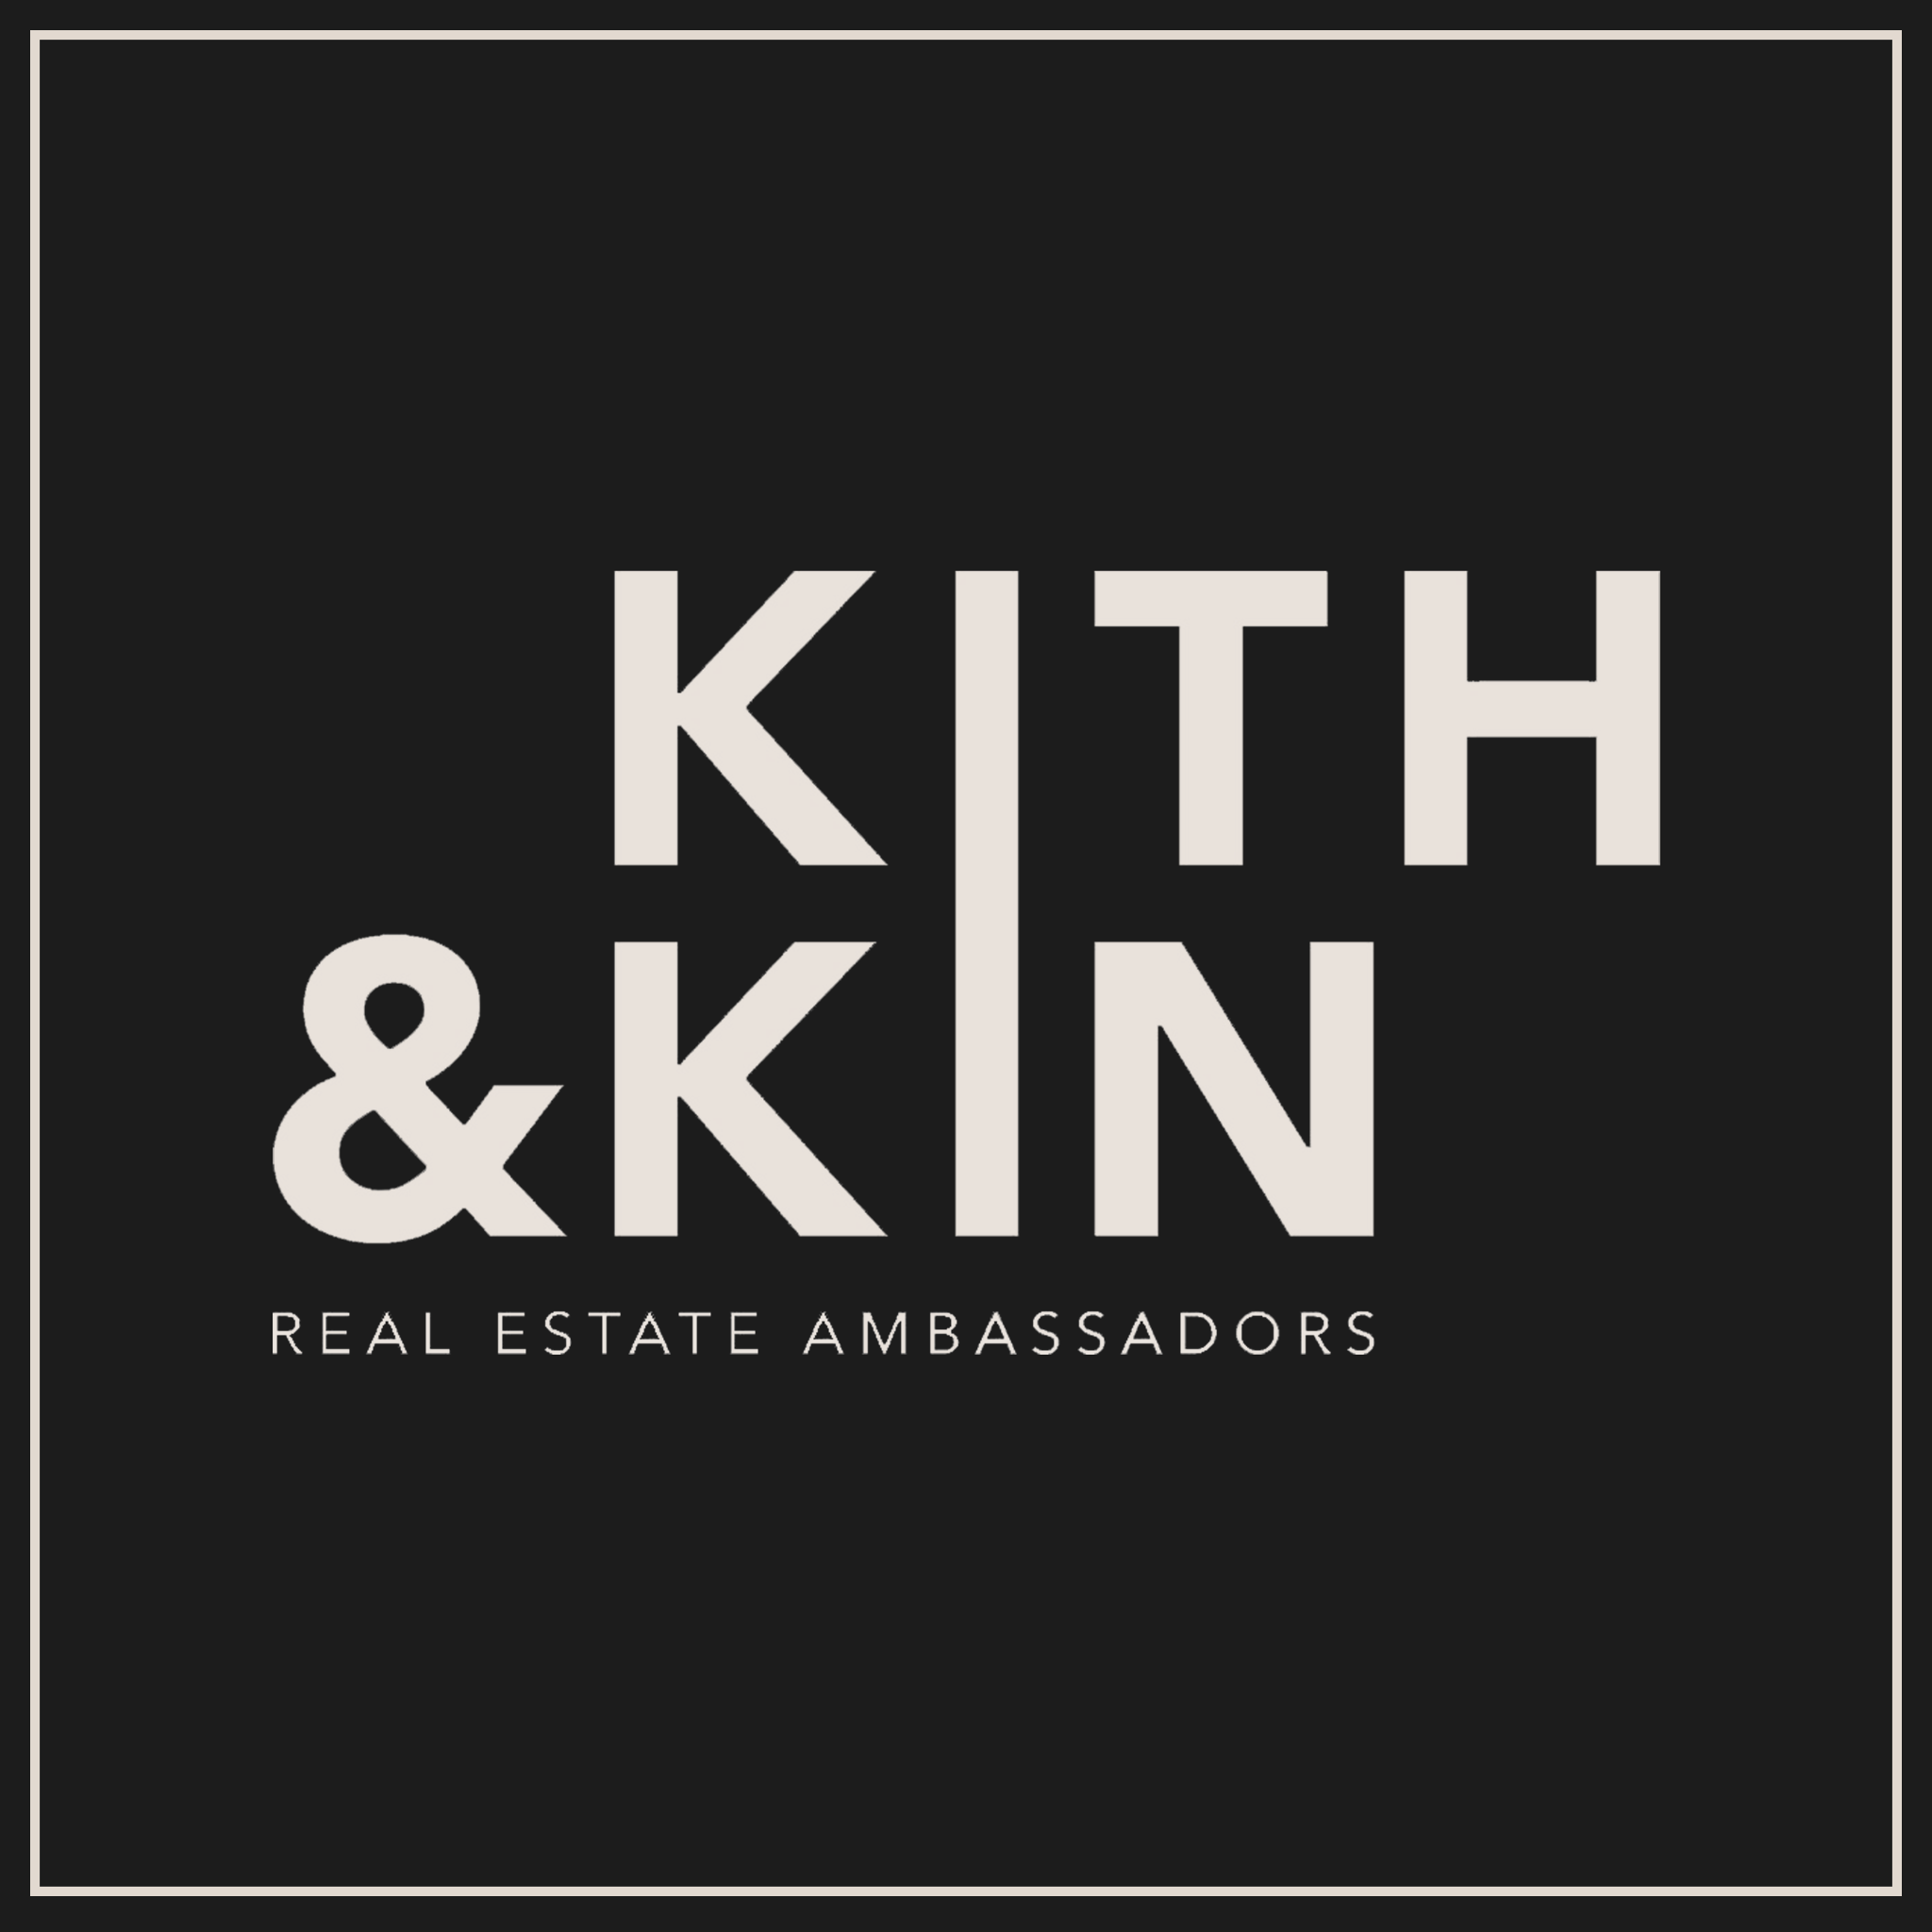 KITH&KIN REAL ESTATE AMBASSADORS